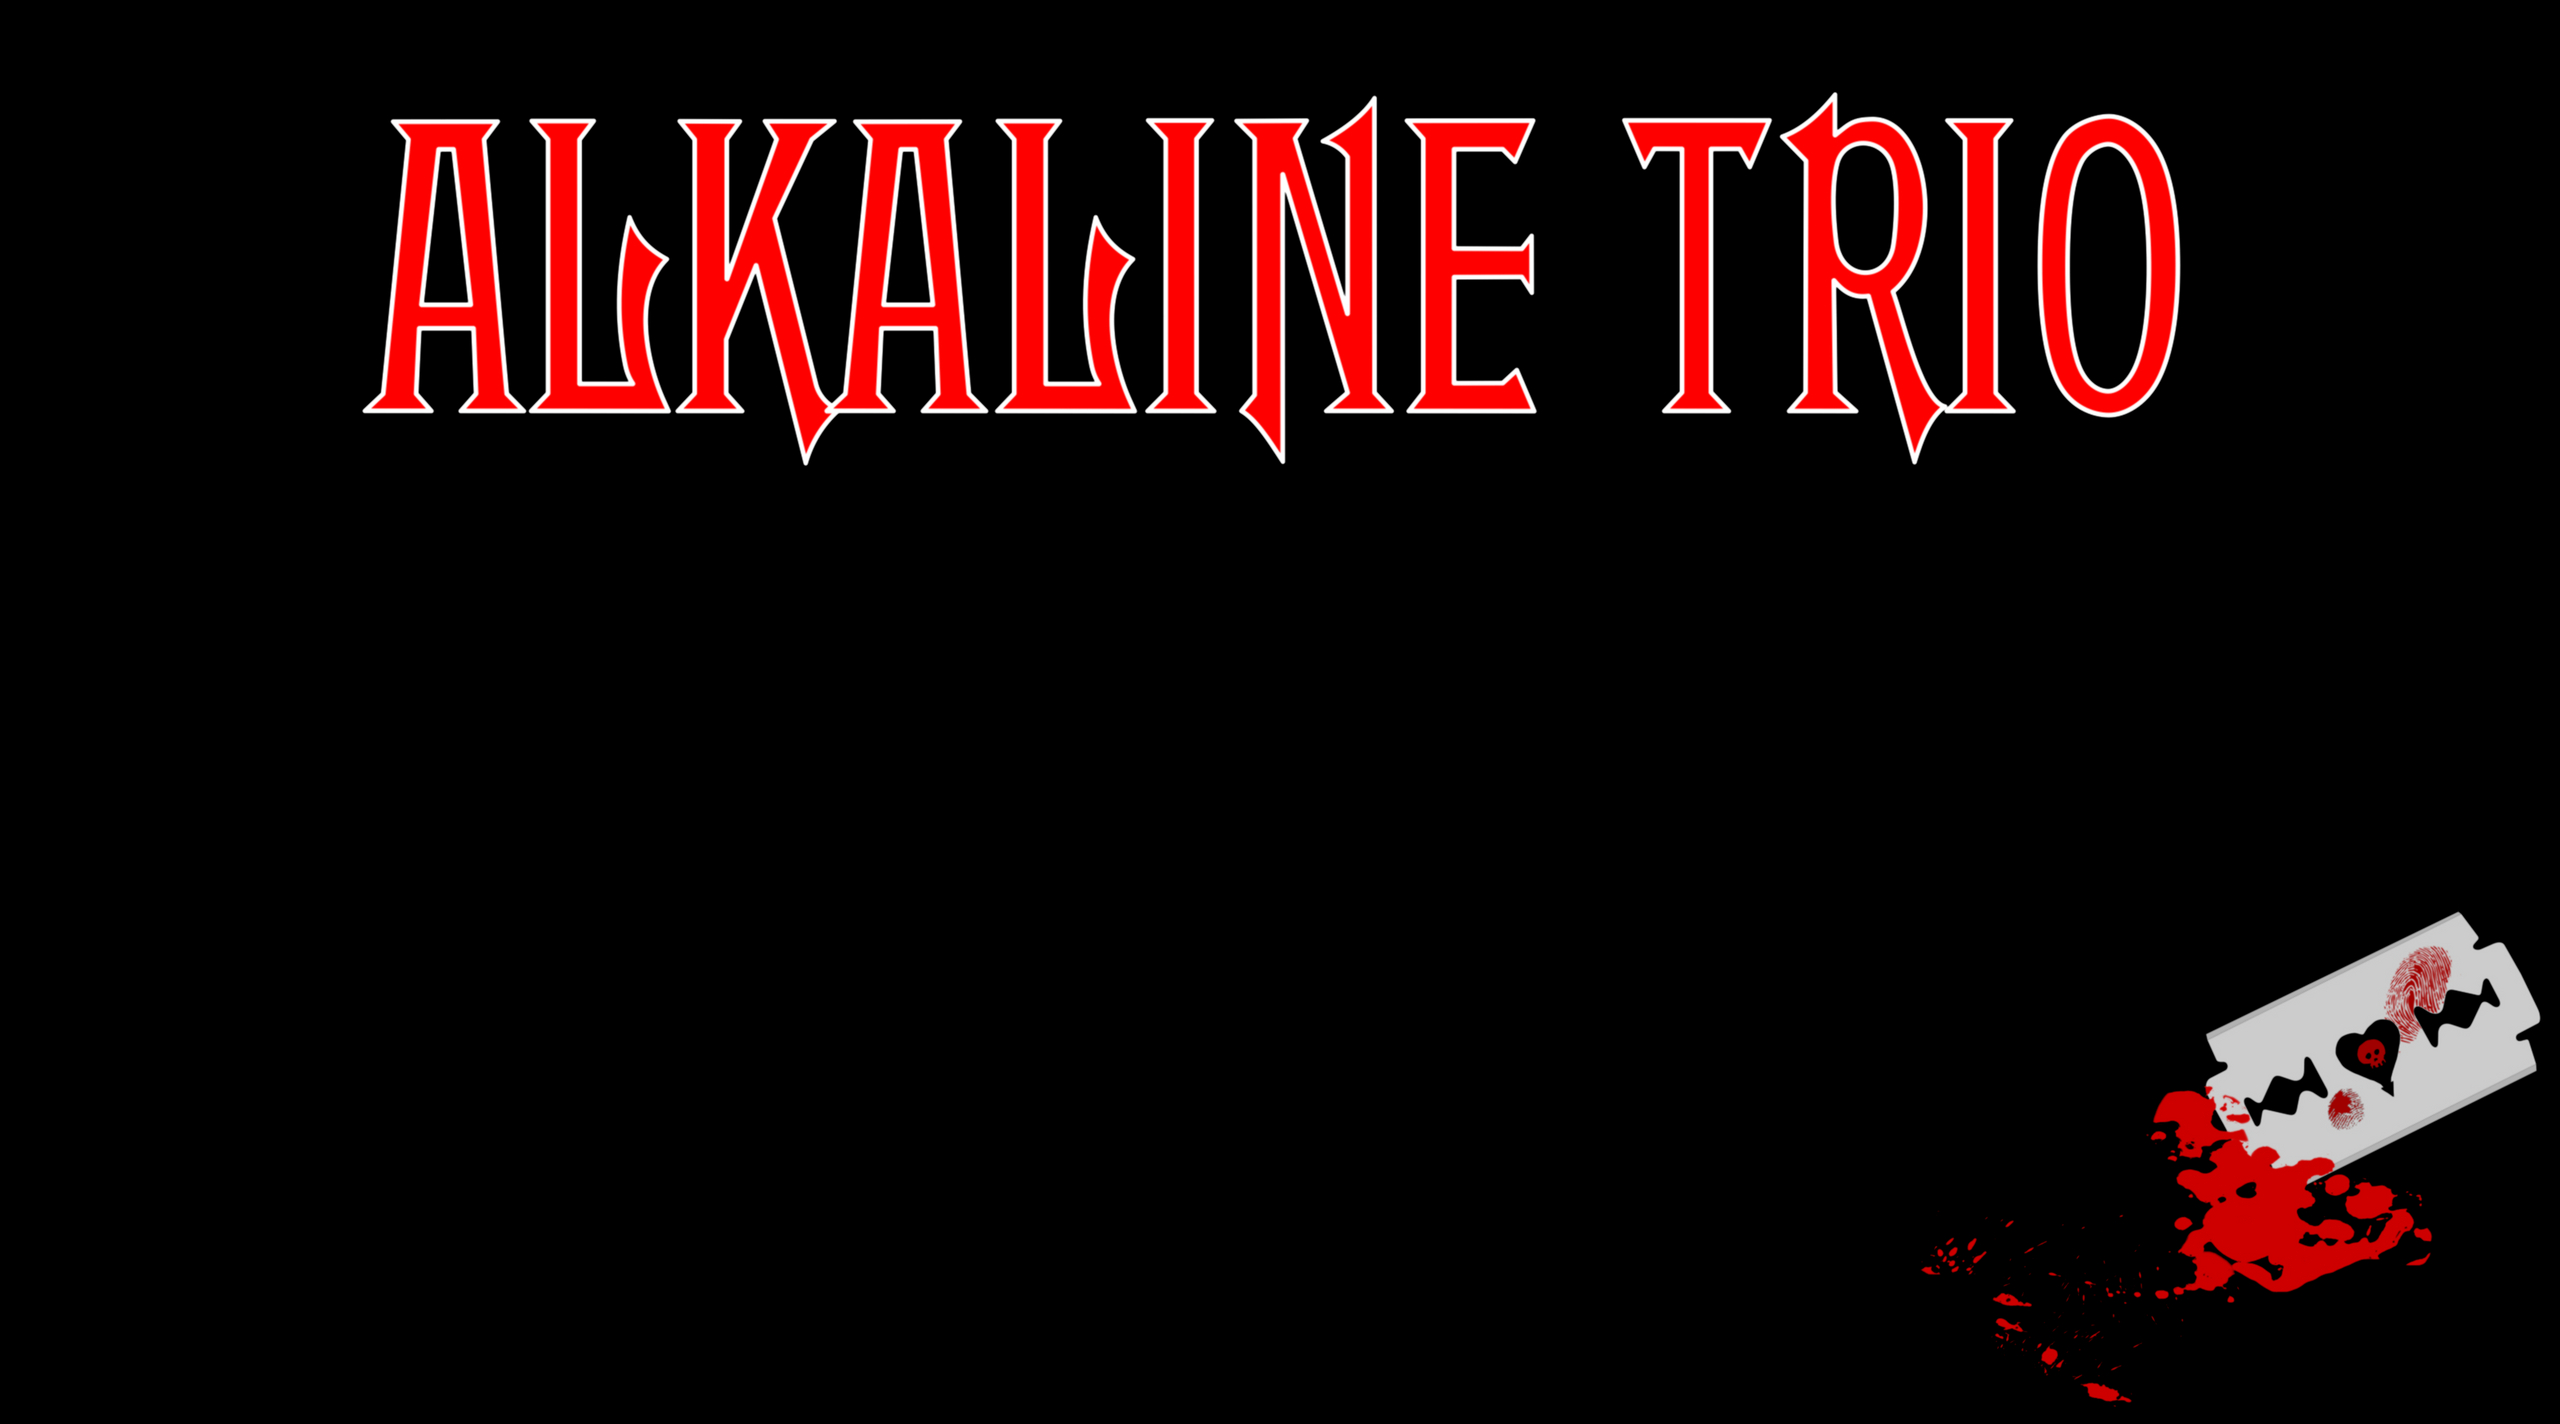 Alkaline Trio Wallpaper Photo